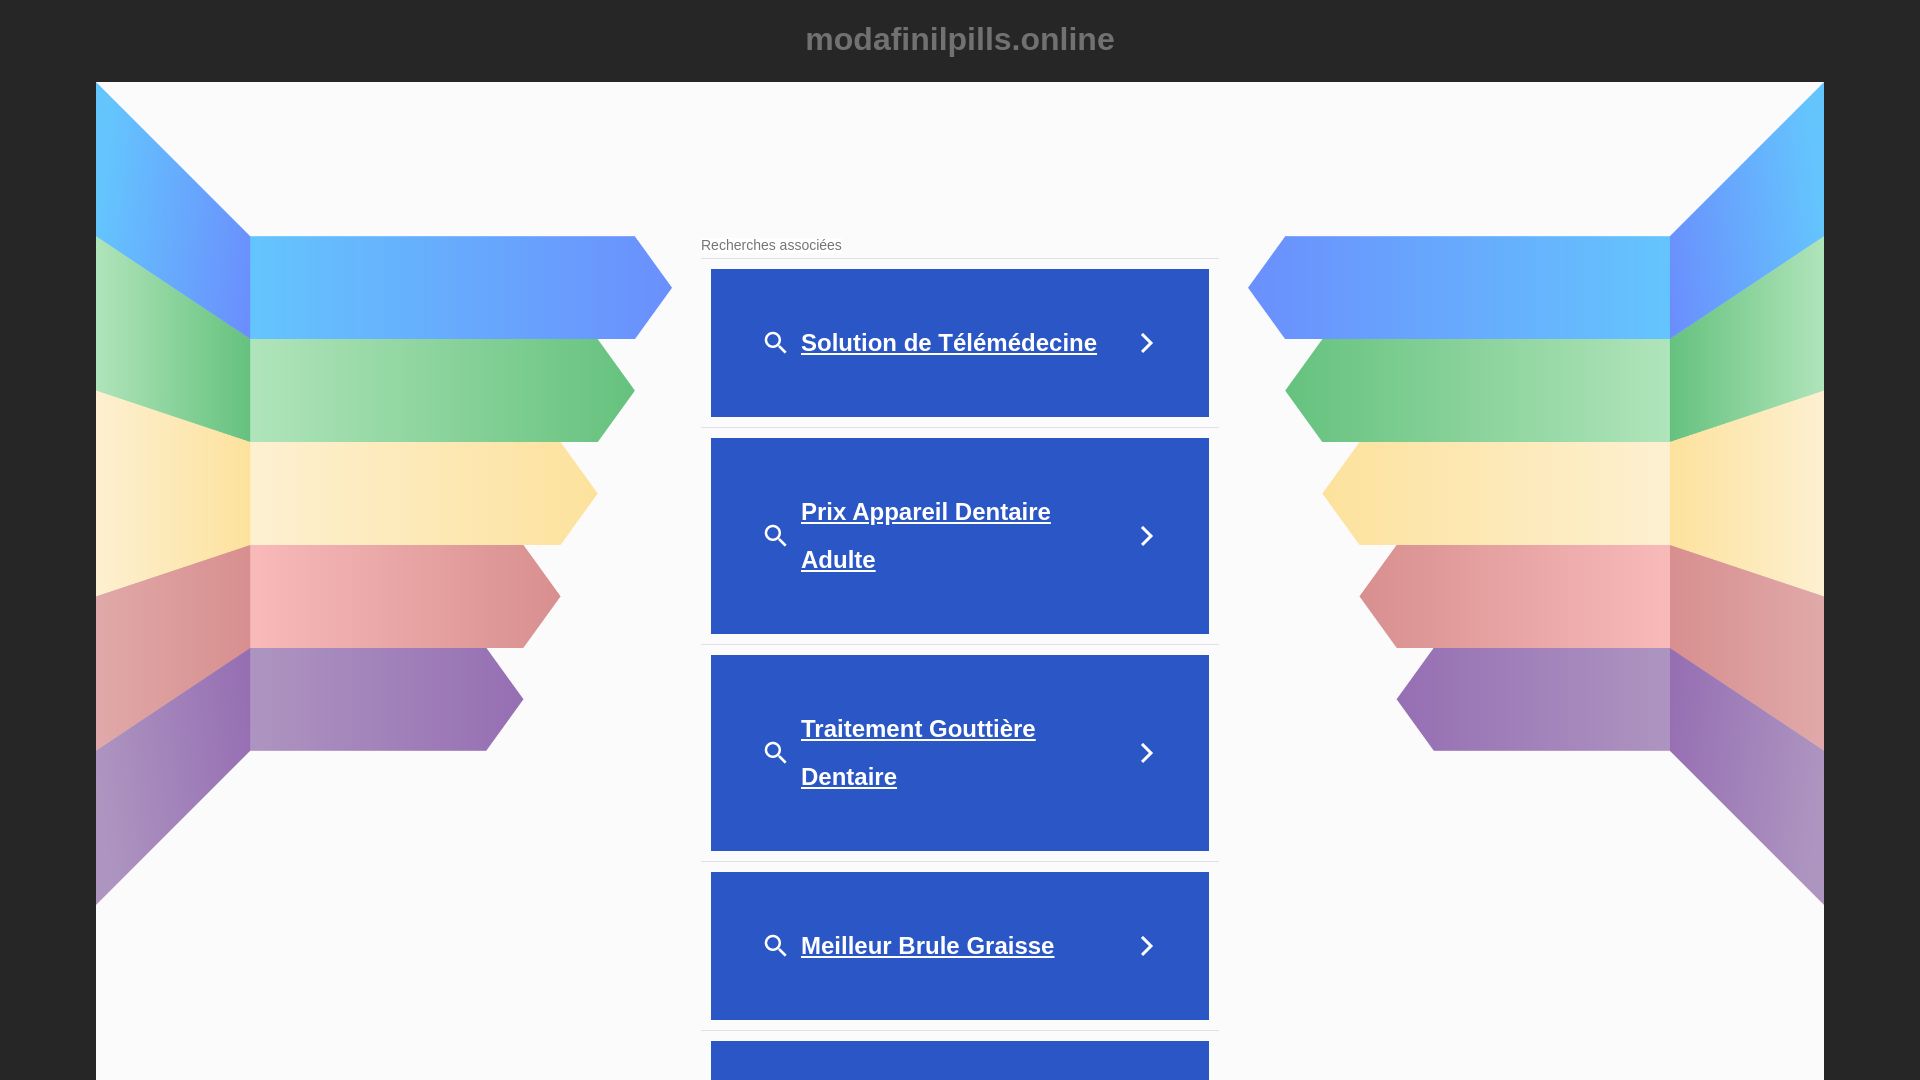 Status do site modafinilpills.online está   ONLINE